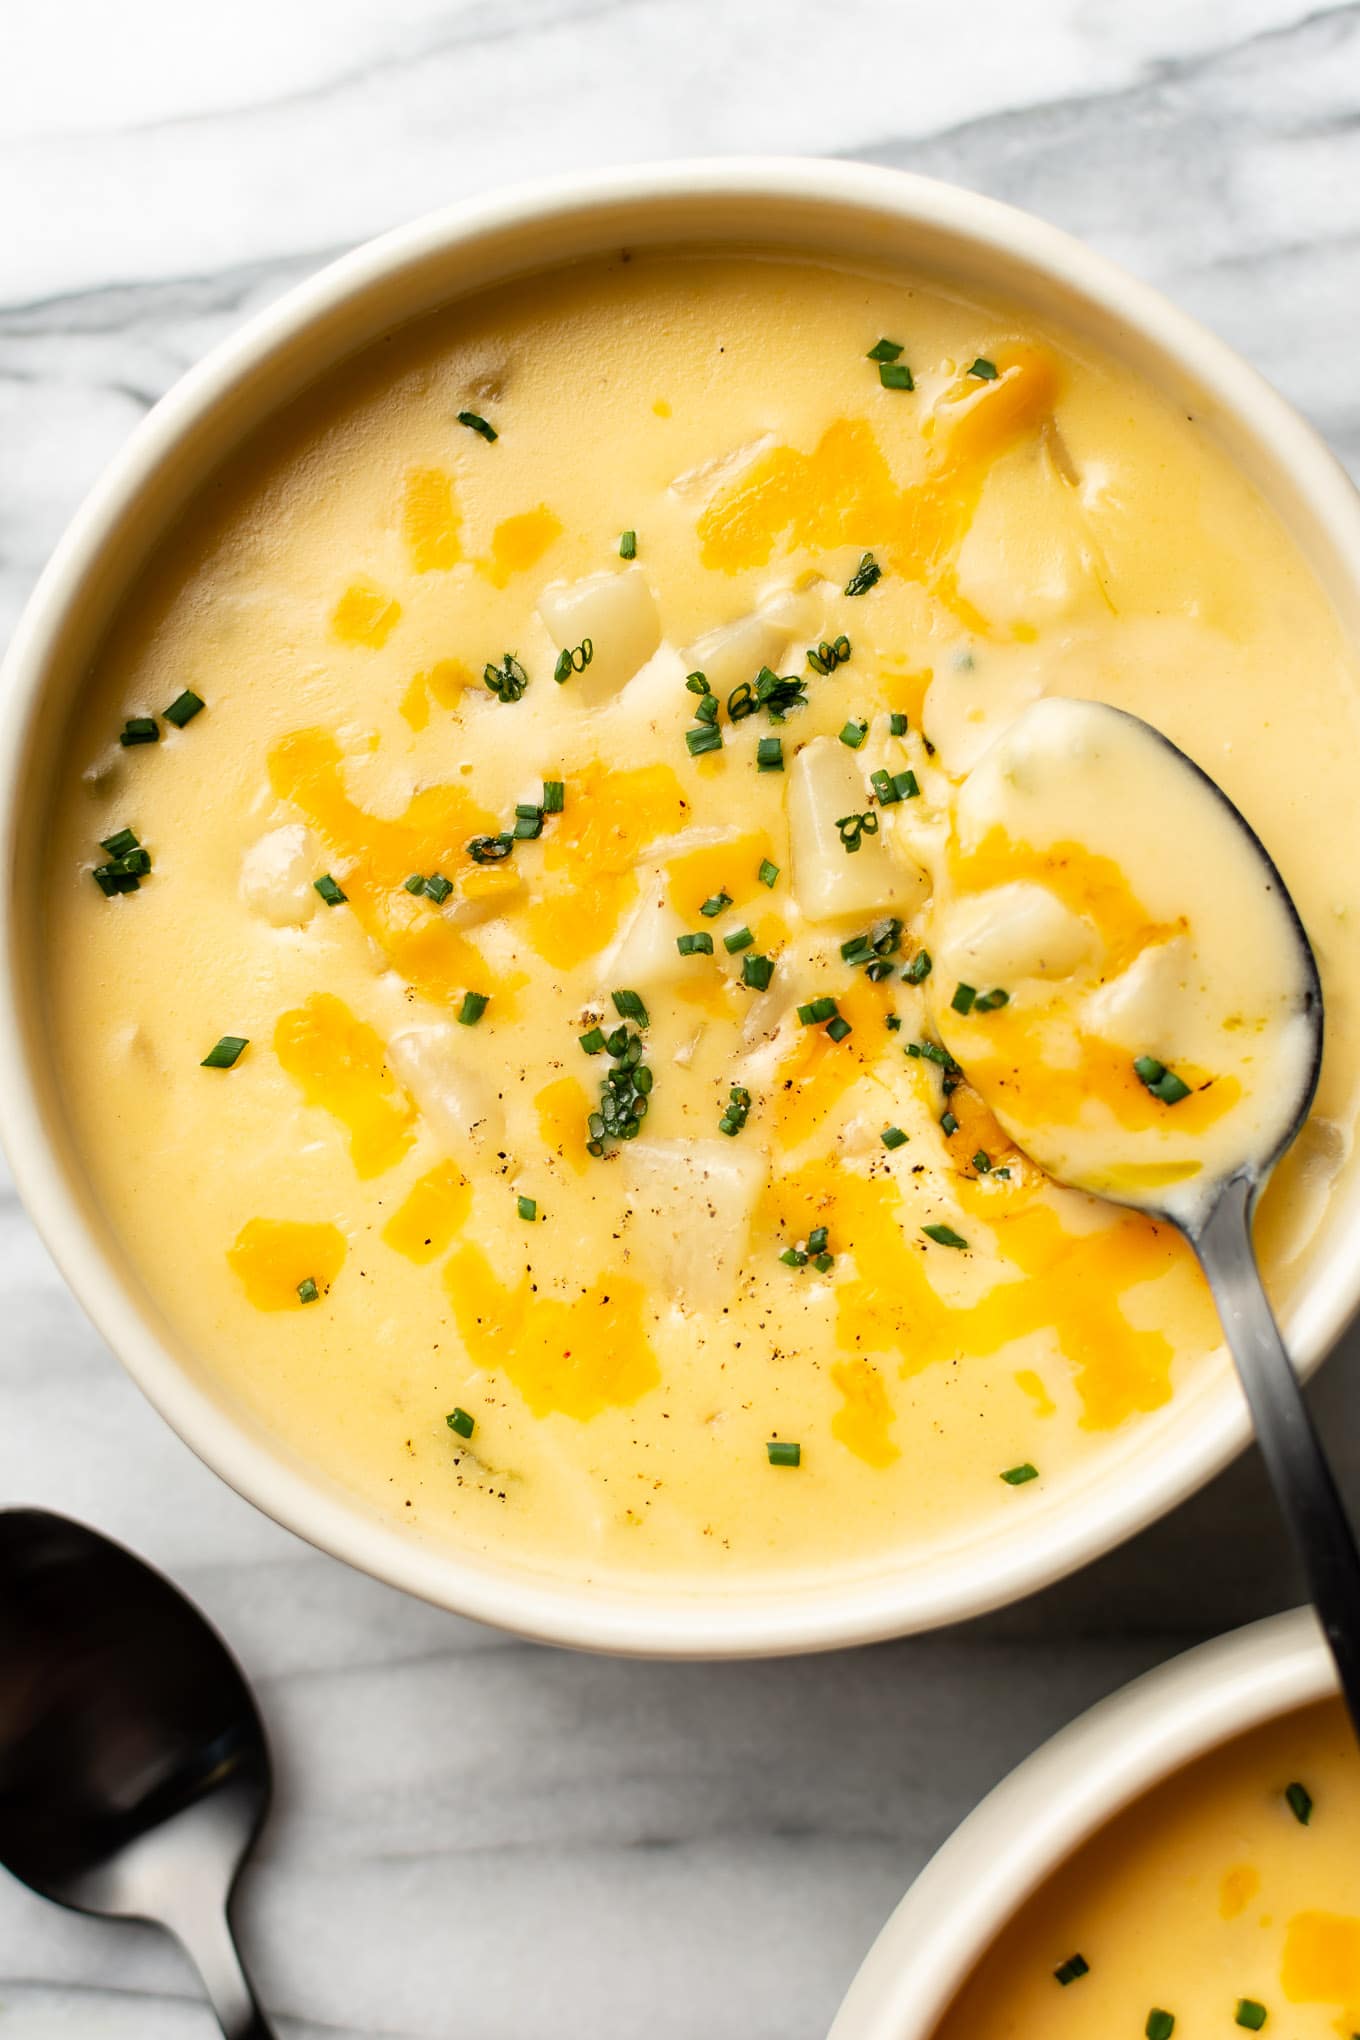 https://www.saltandlavender.com/wp-content/uploads/2021/07/cheesy-potato-soup-1.jpg